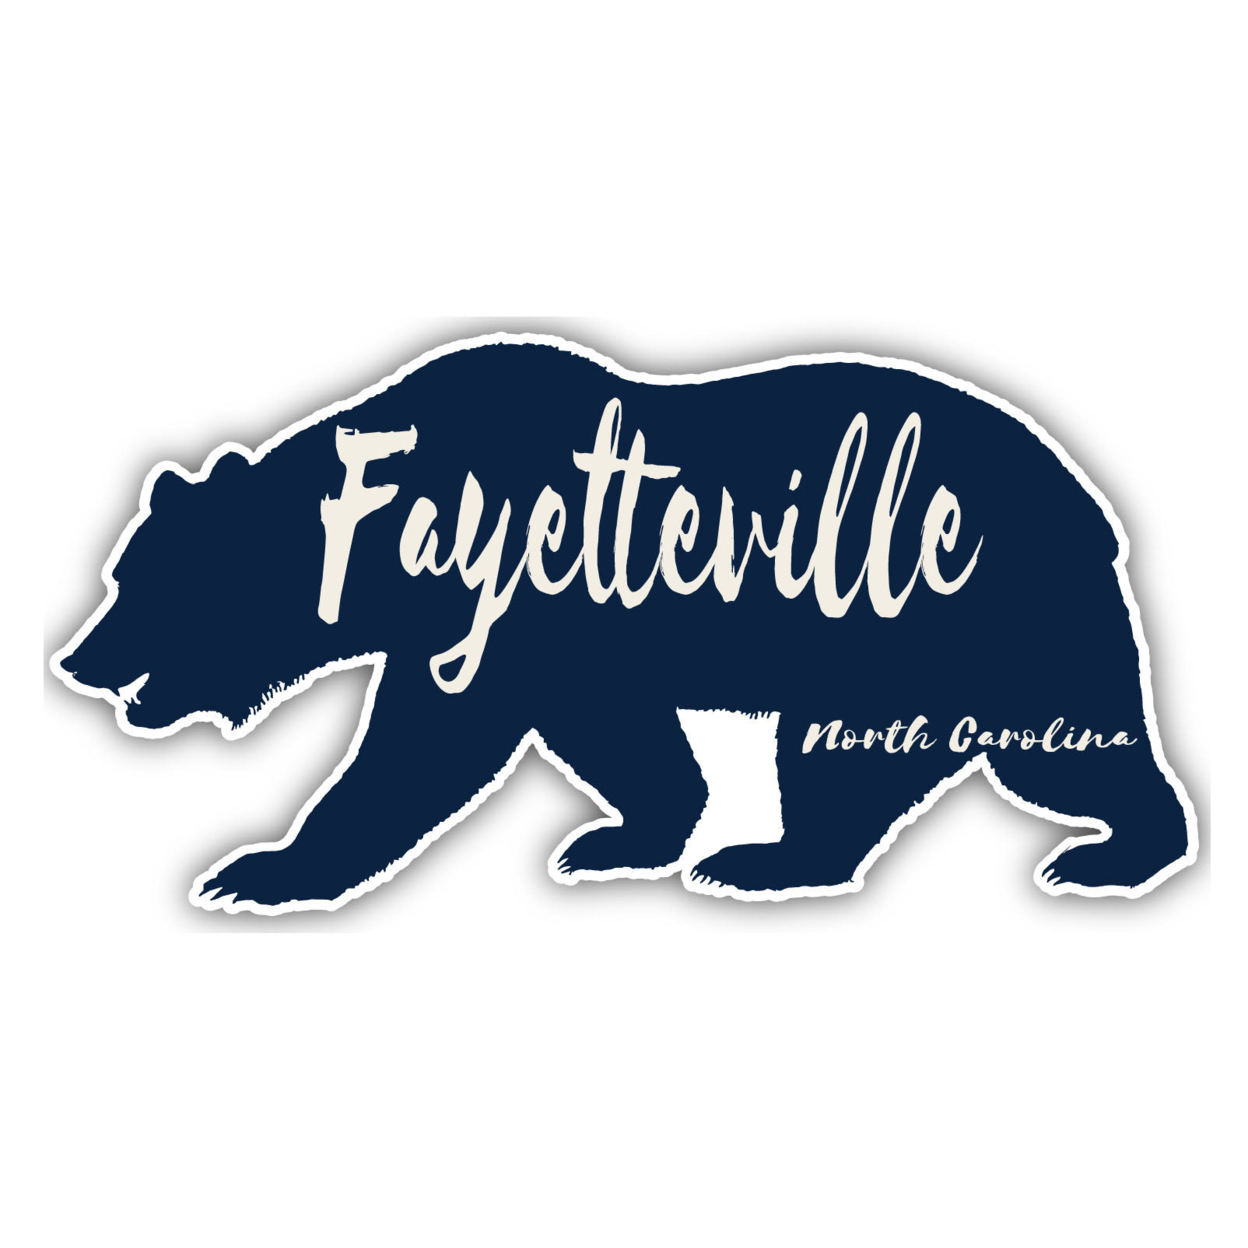 Fayetteville North Carolina Souvenir Decorative Stickers (Choose Theme And Size) - Single Unit, 10-Inch, Tent